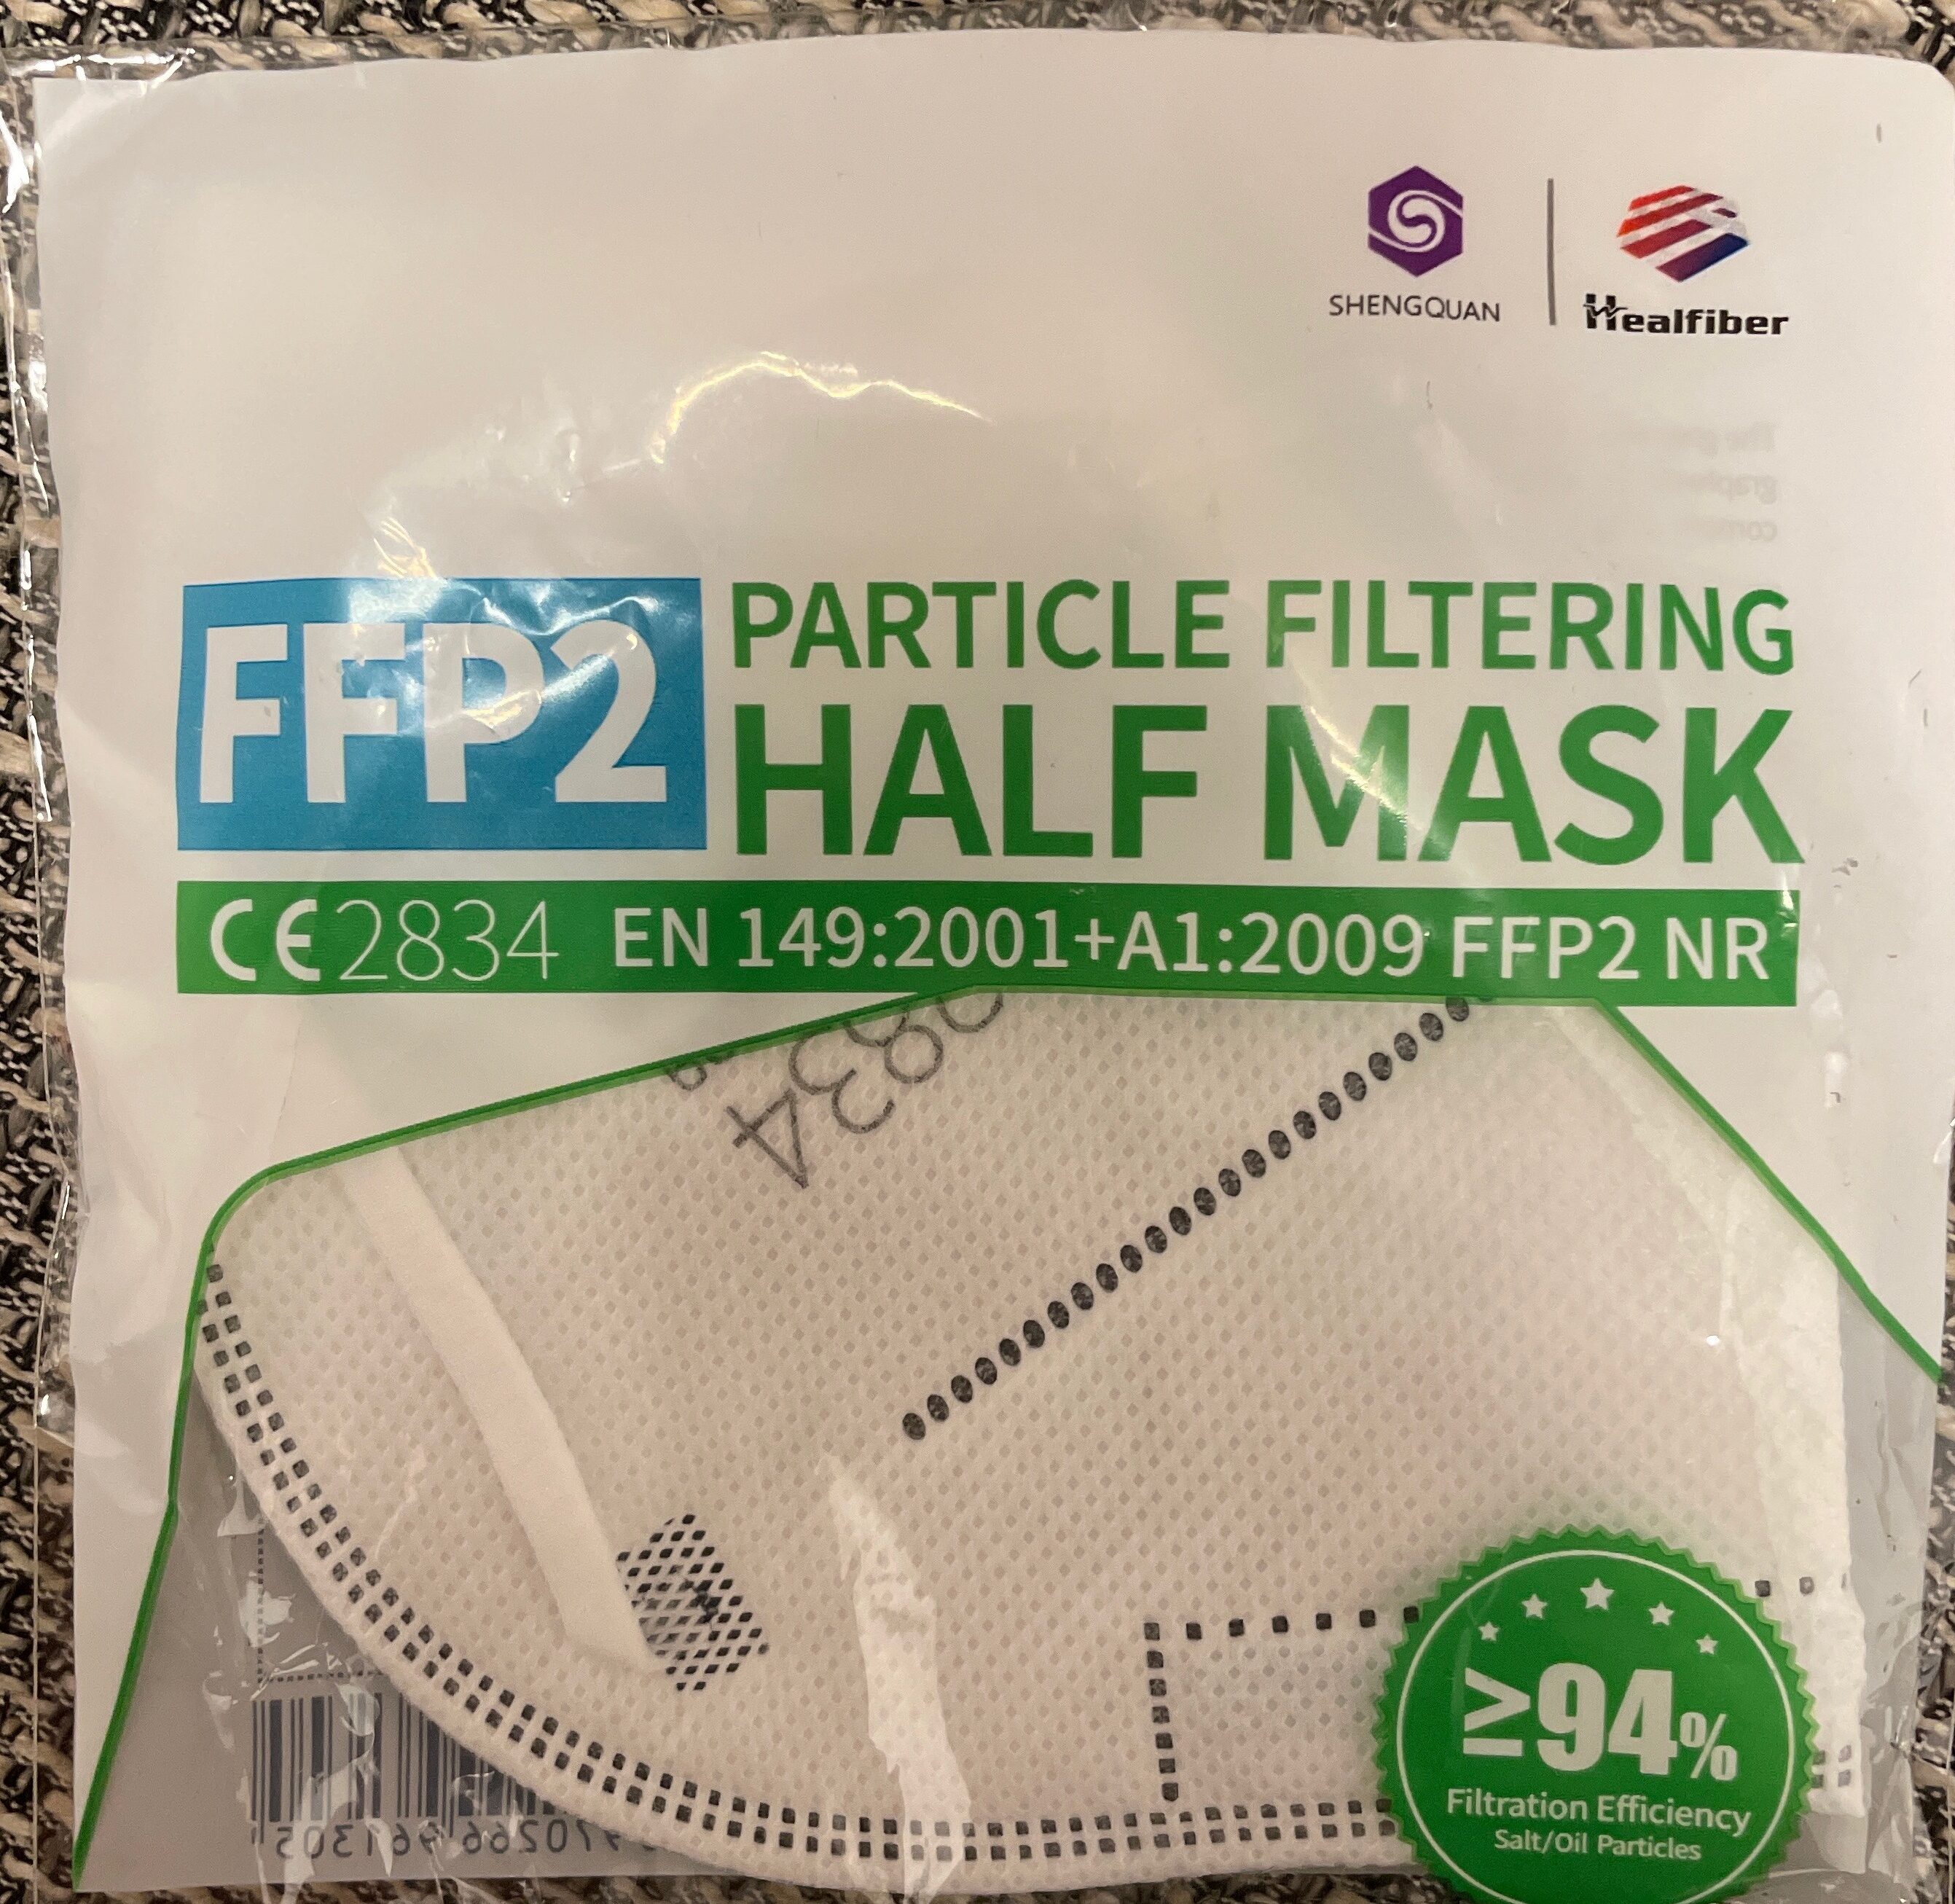 FFP2 particle filtering half mask - Product - de